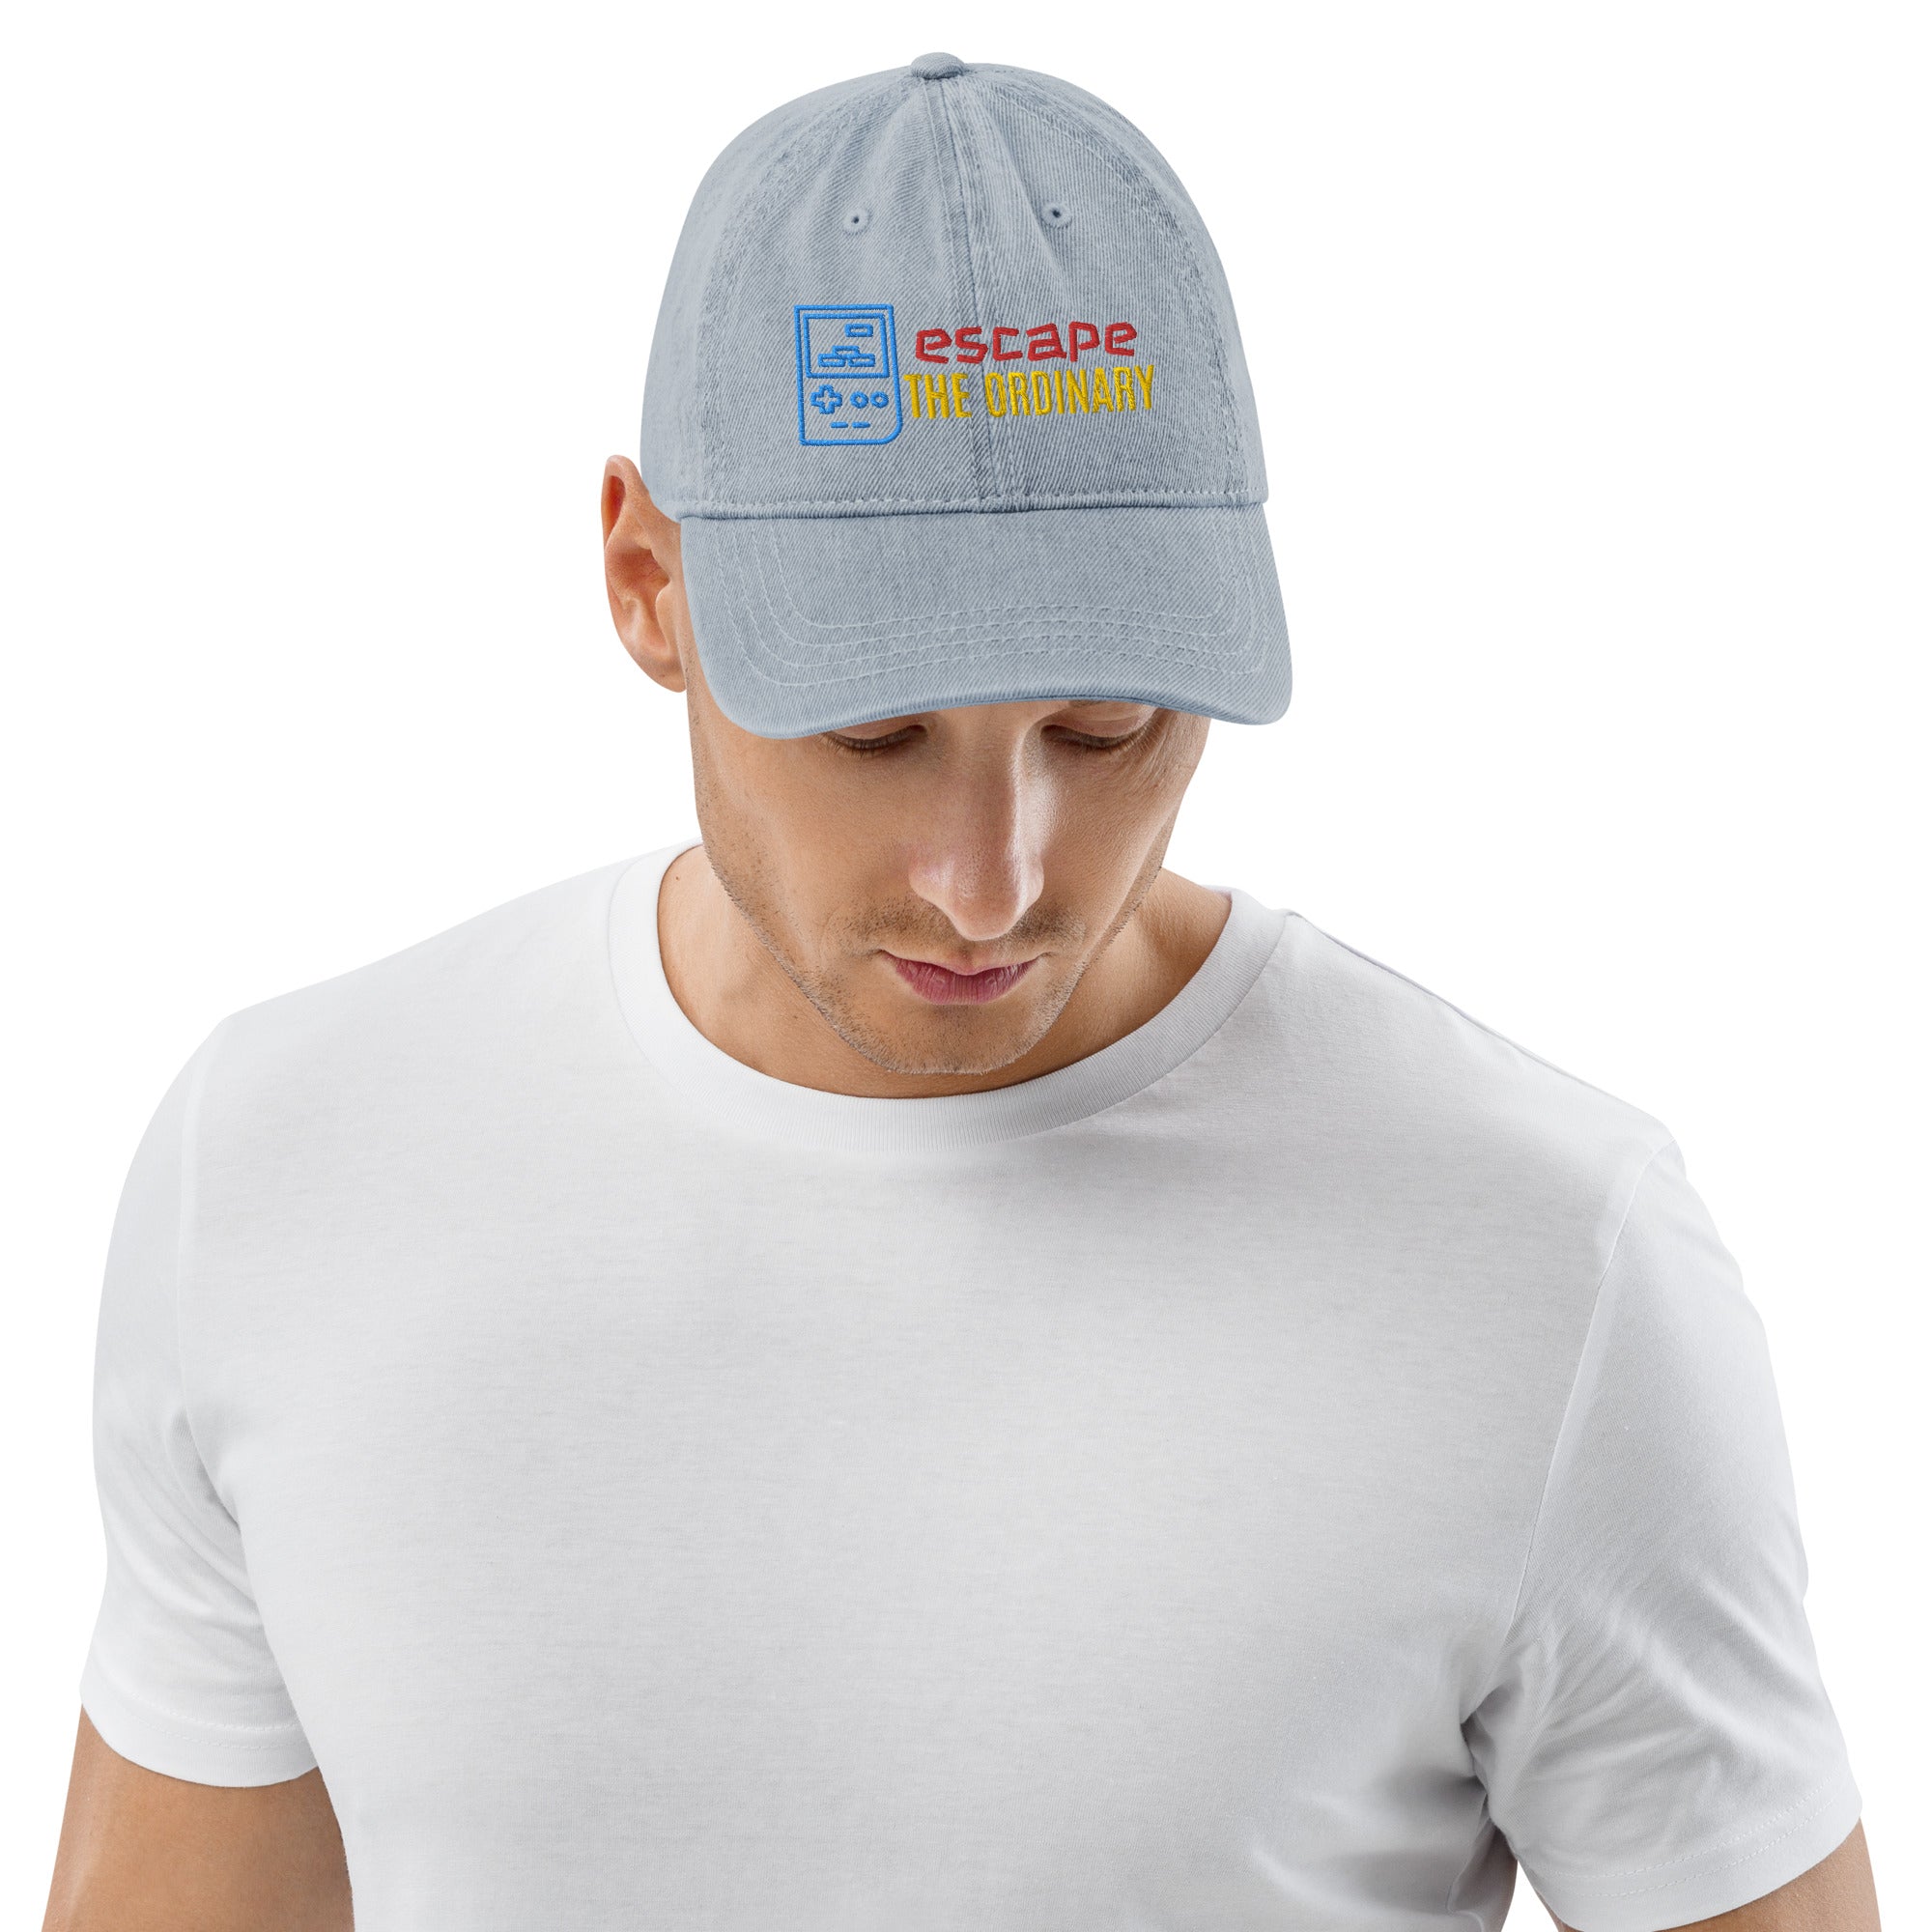 Escape the Ordinary Embroidered Denim Hat